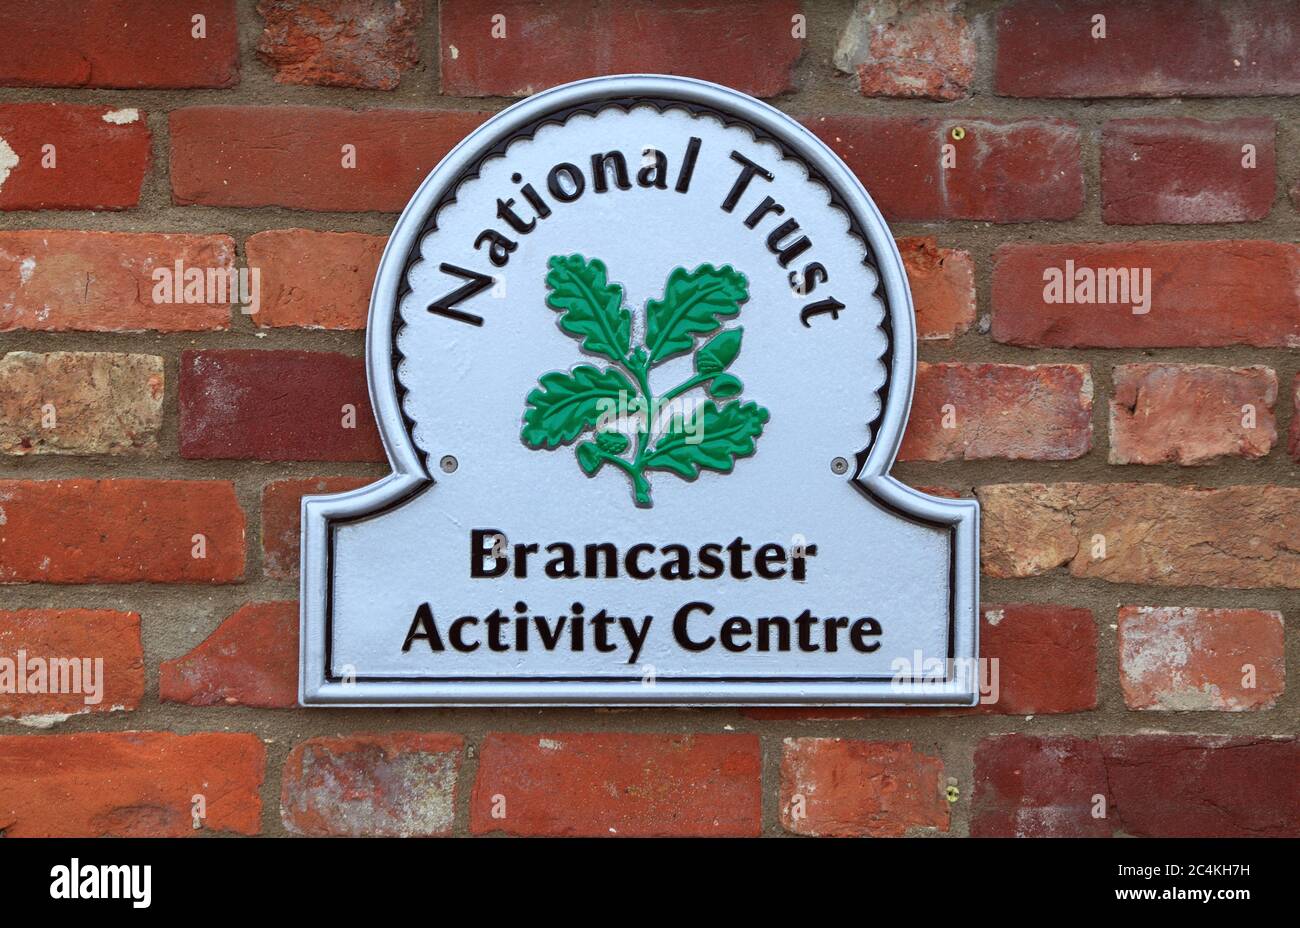 National Trust, logo, sign, Brancaster Activity Centre, Brancaster Staithe, Norfolk, England, UK Stock Photo